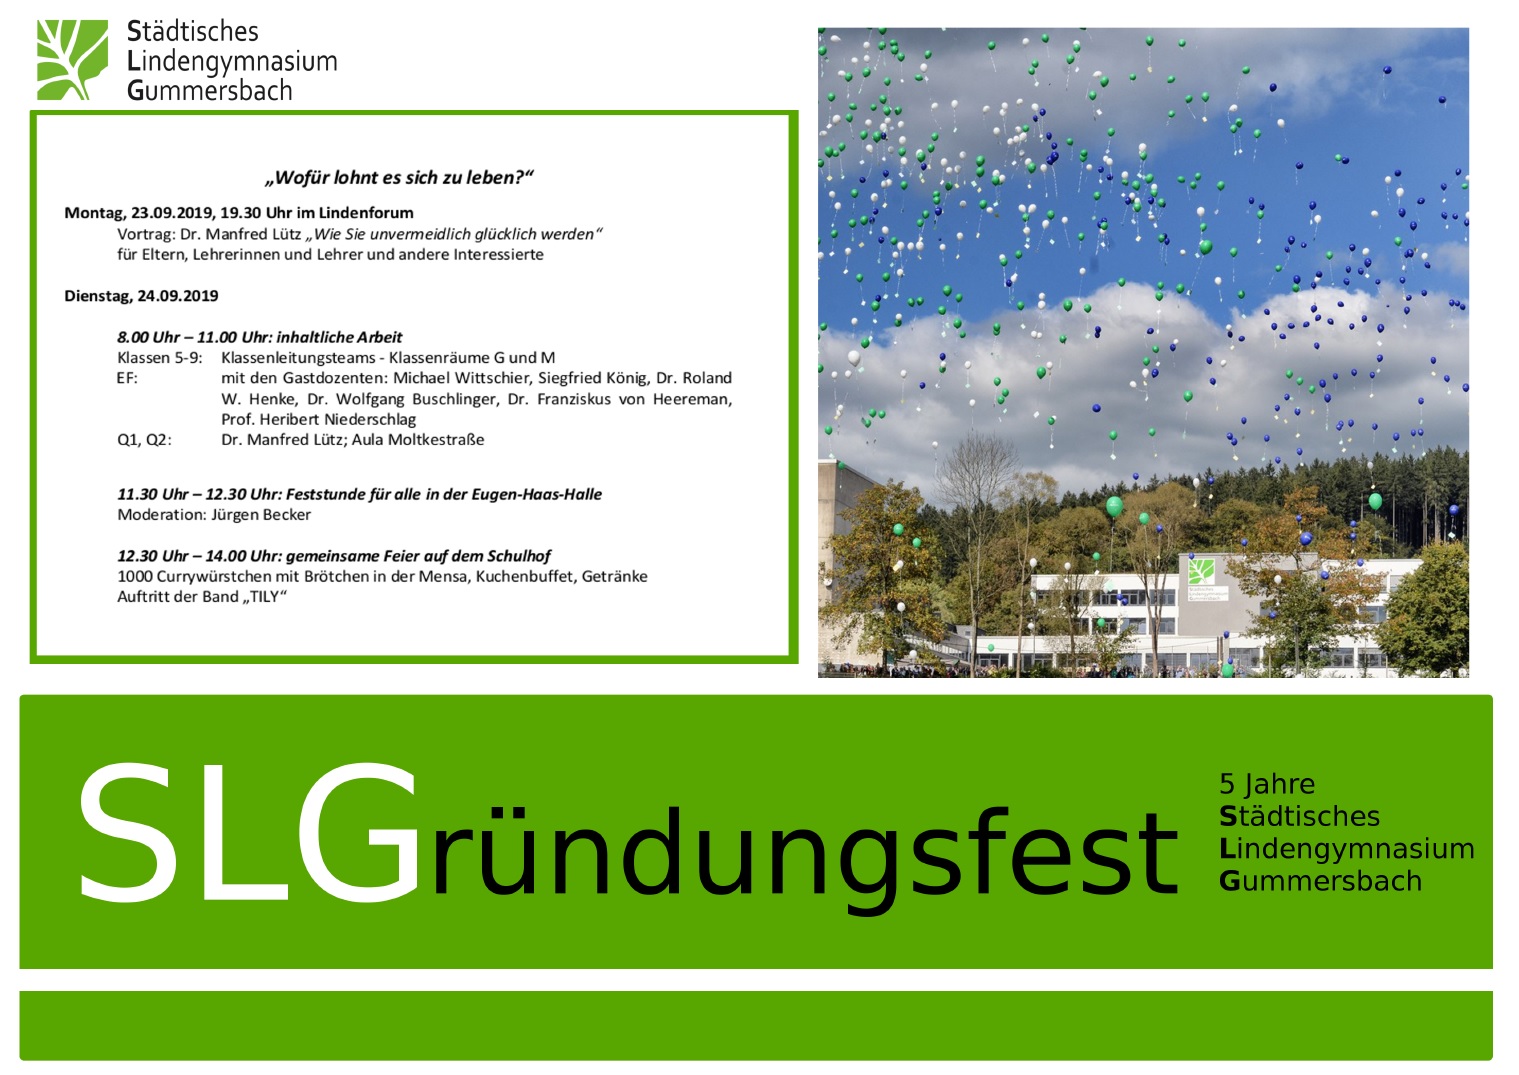 Gruendungsfest